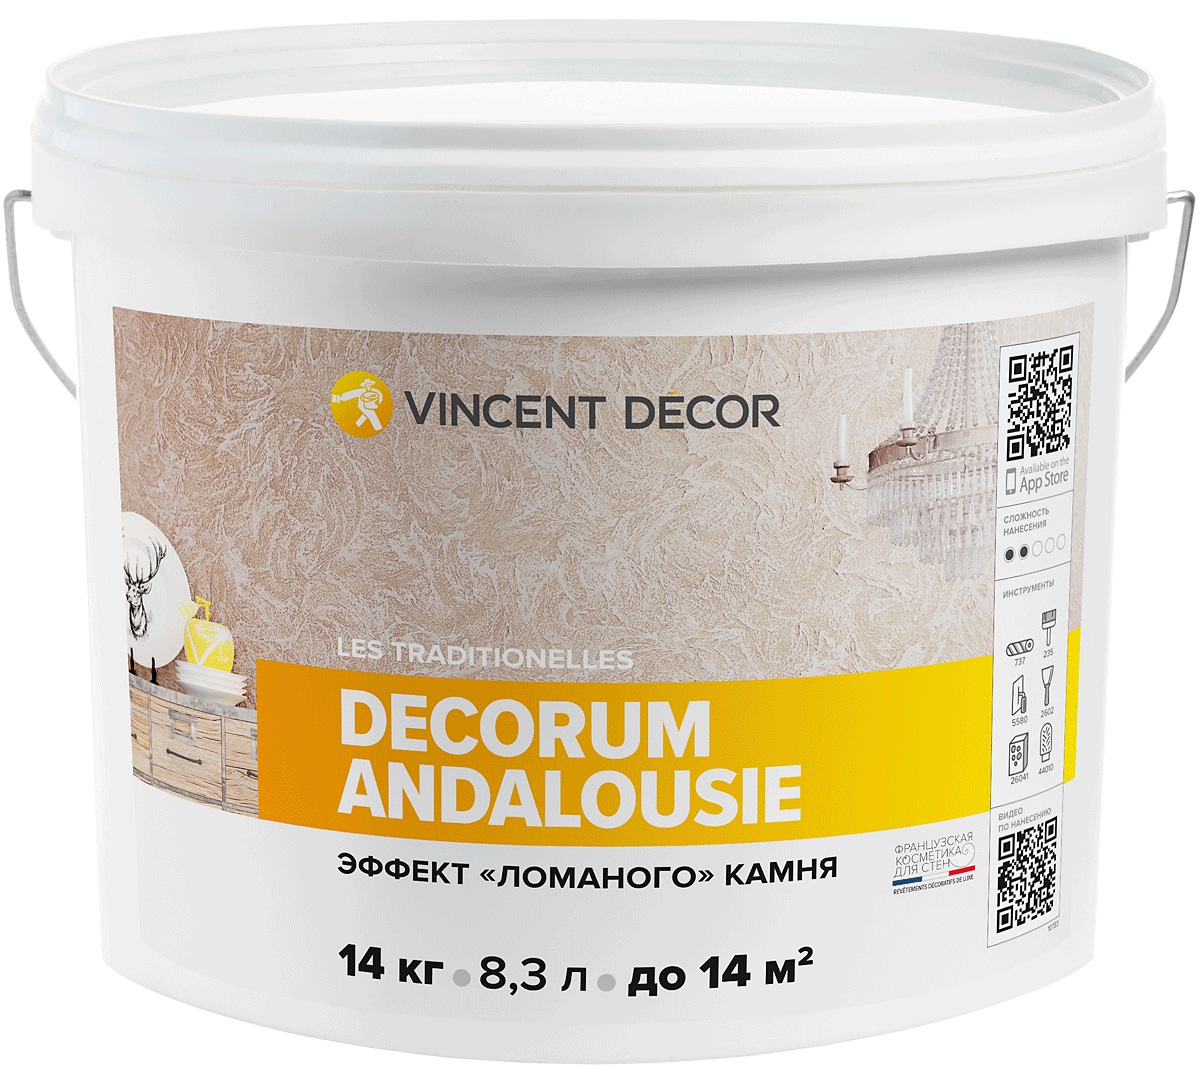 Vincent Decor Decorum Andalusie/ Декор Декорум Андалусия